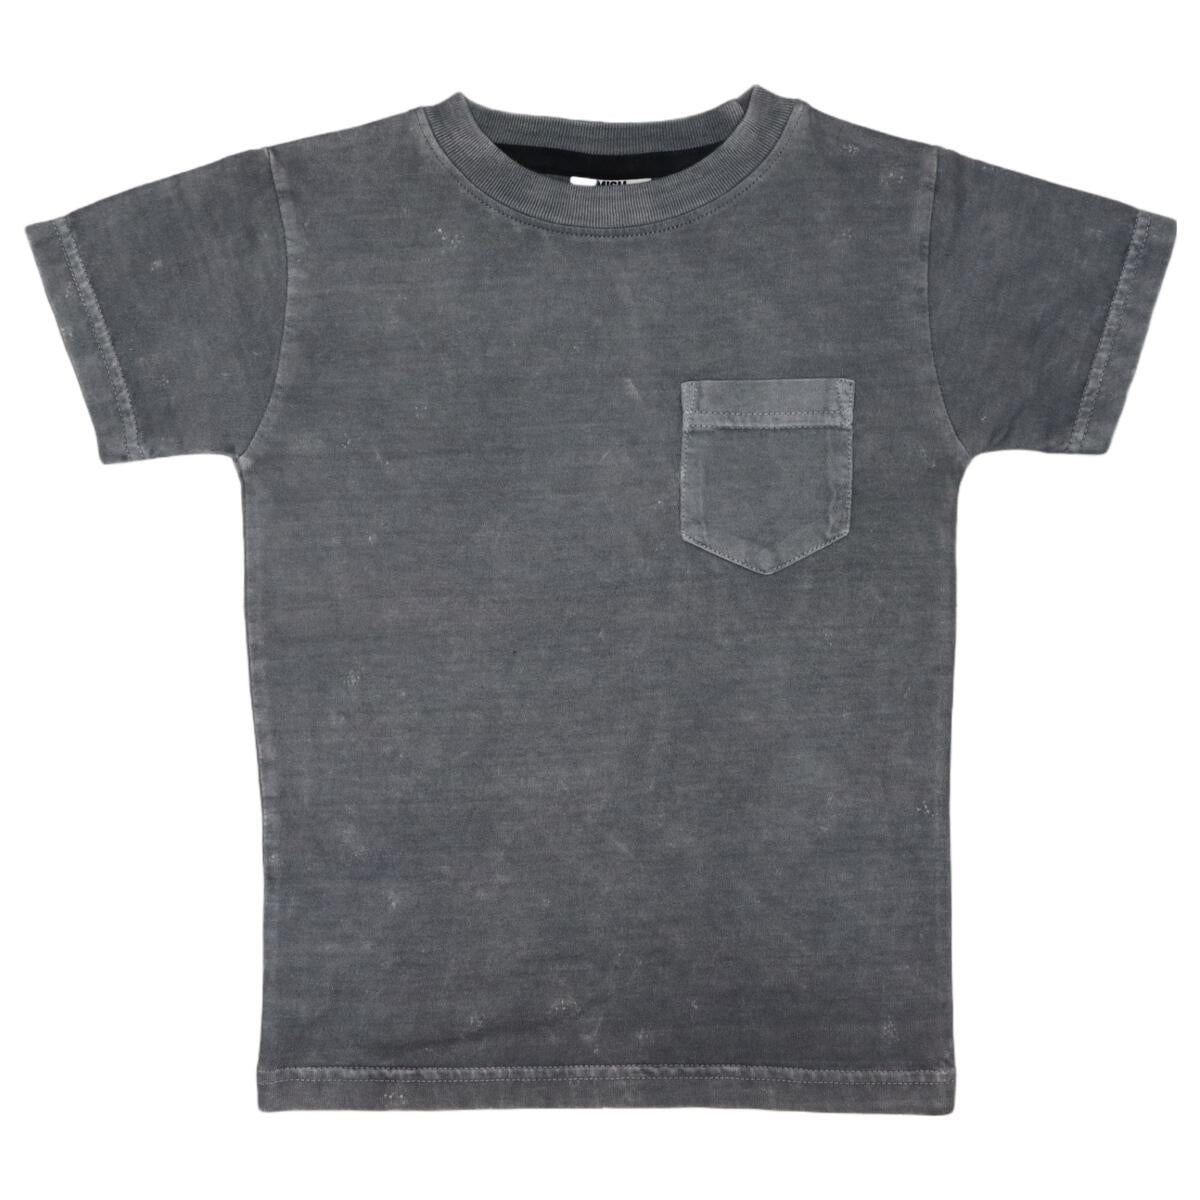 Coal Enzyme Pocket Tee Shirt - Twinkle Twinkle Little One